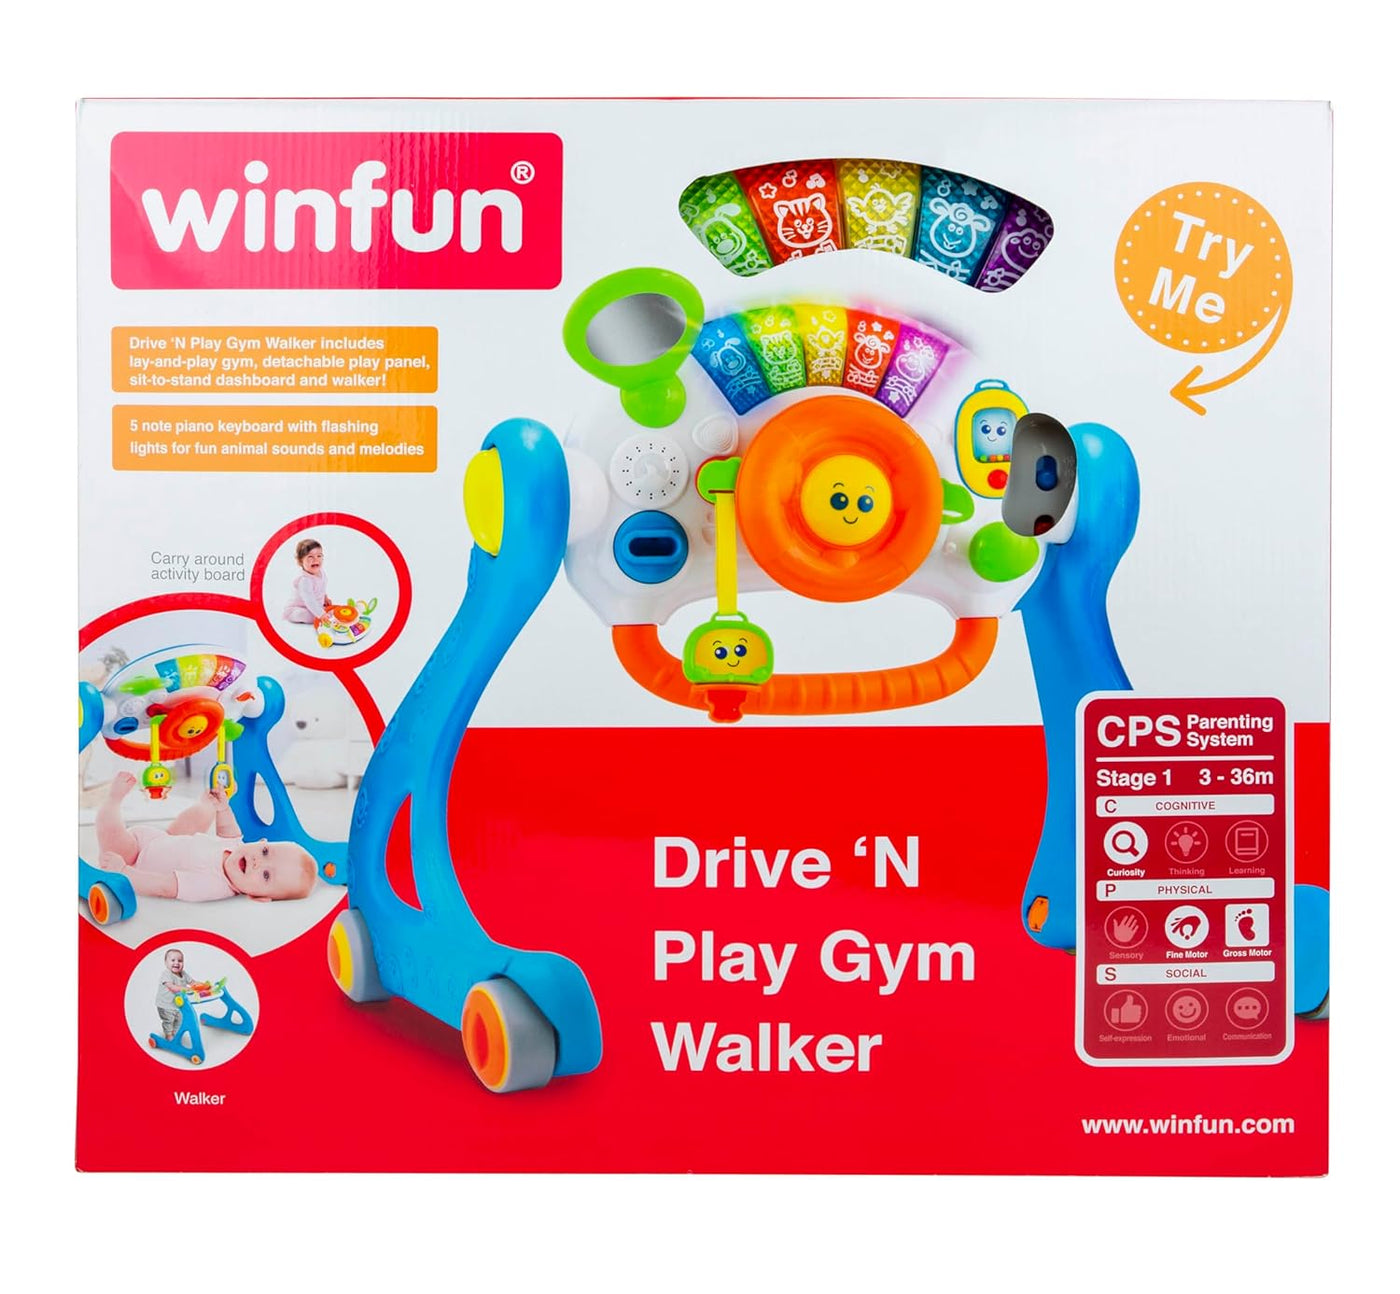 Winfun: Drive 'N Play Gym Walker